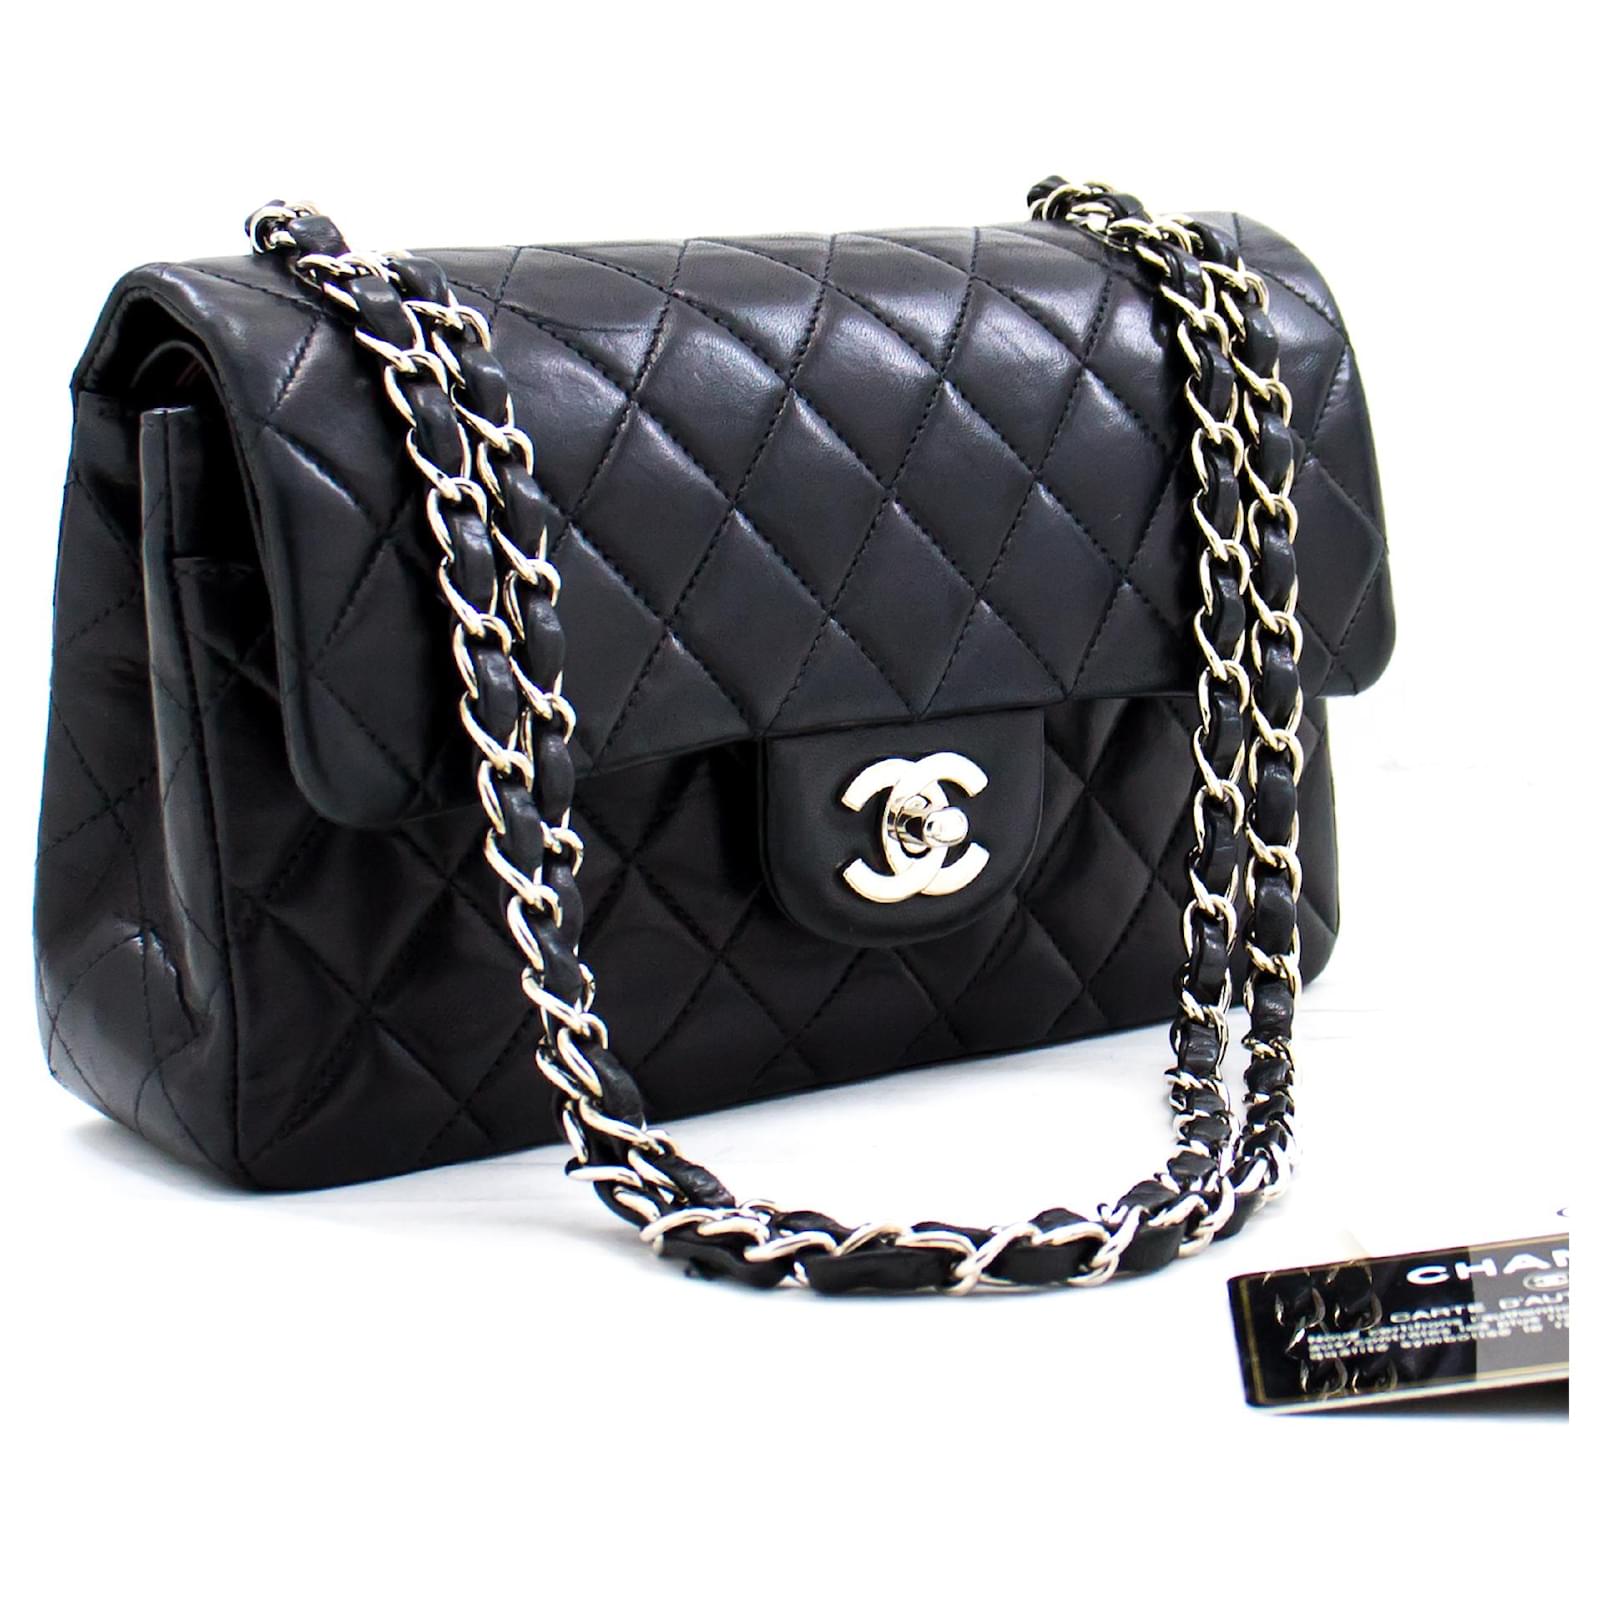 Chanel 2.55 lined Flap Silver Chain Shoulder Bag Black Lambskin